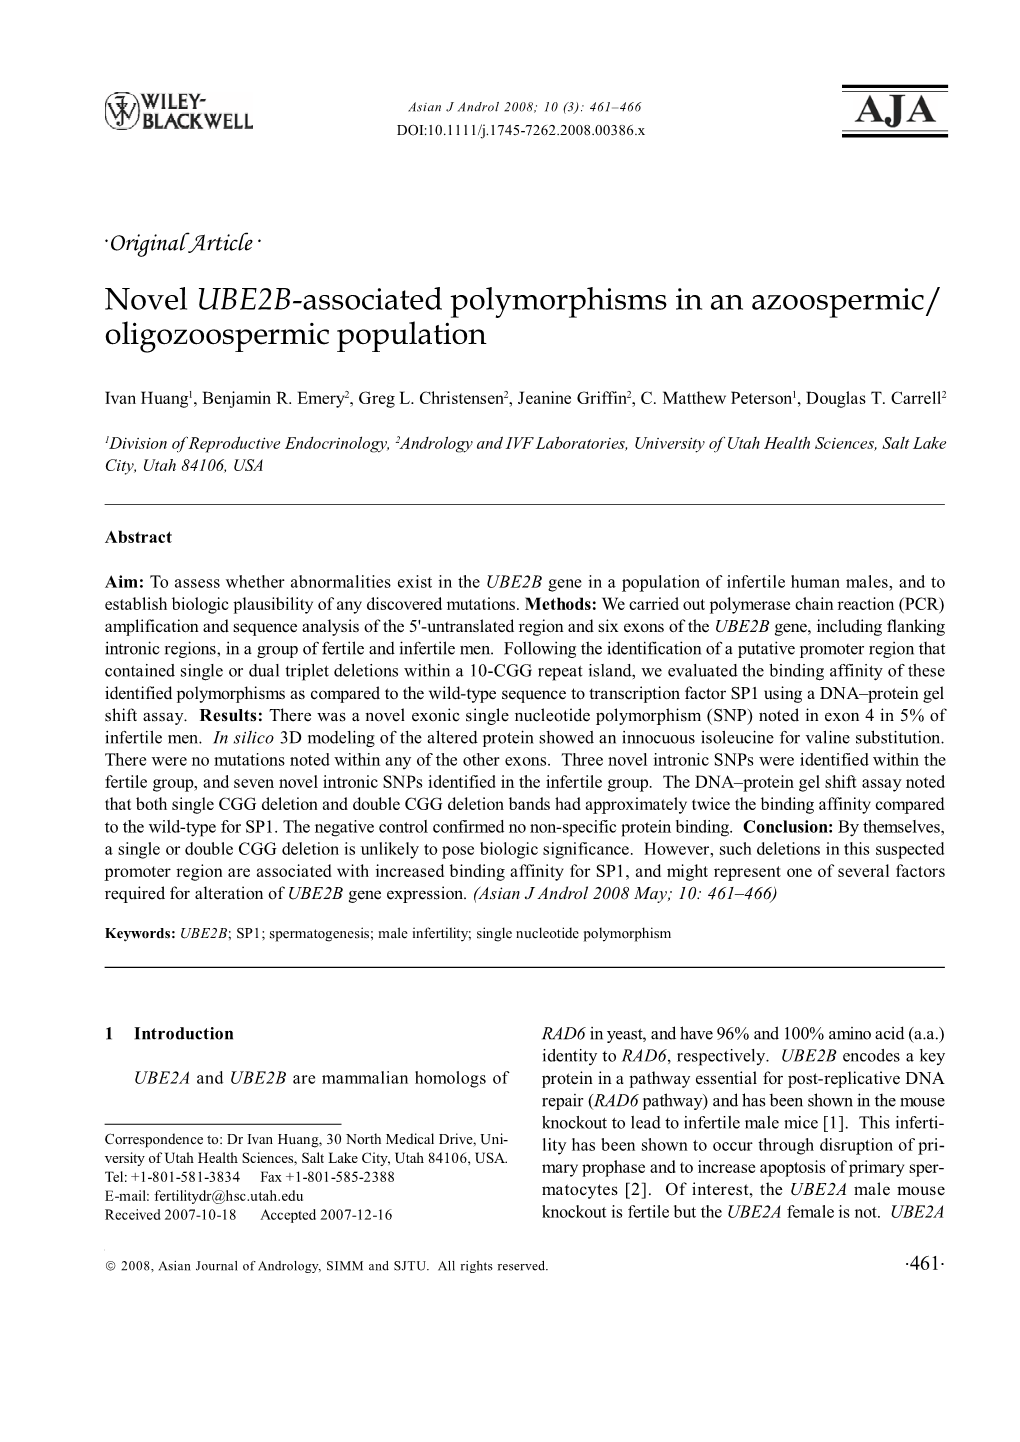 Novel UBE2B-Associated Polymorphisms in an Azoospermic/Oligozoospermic Population